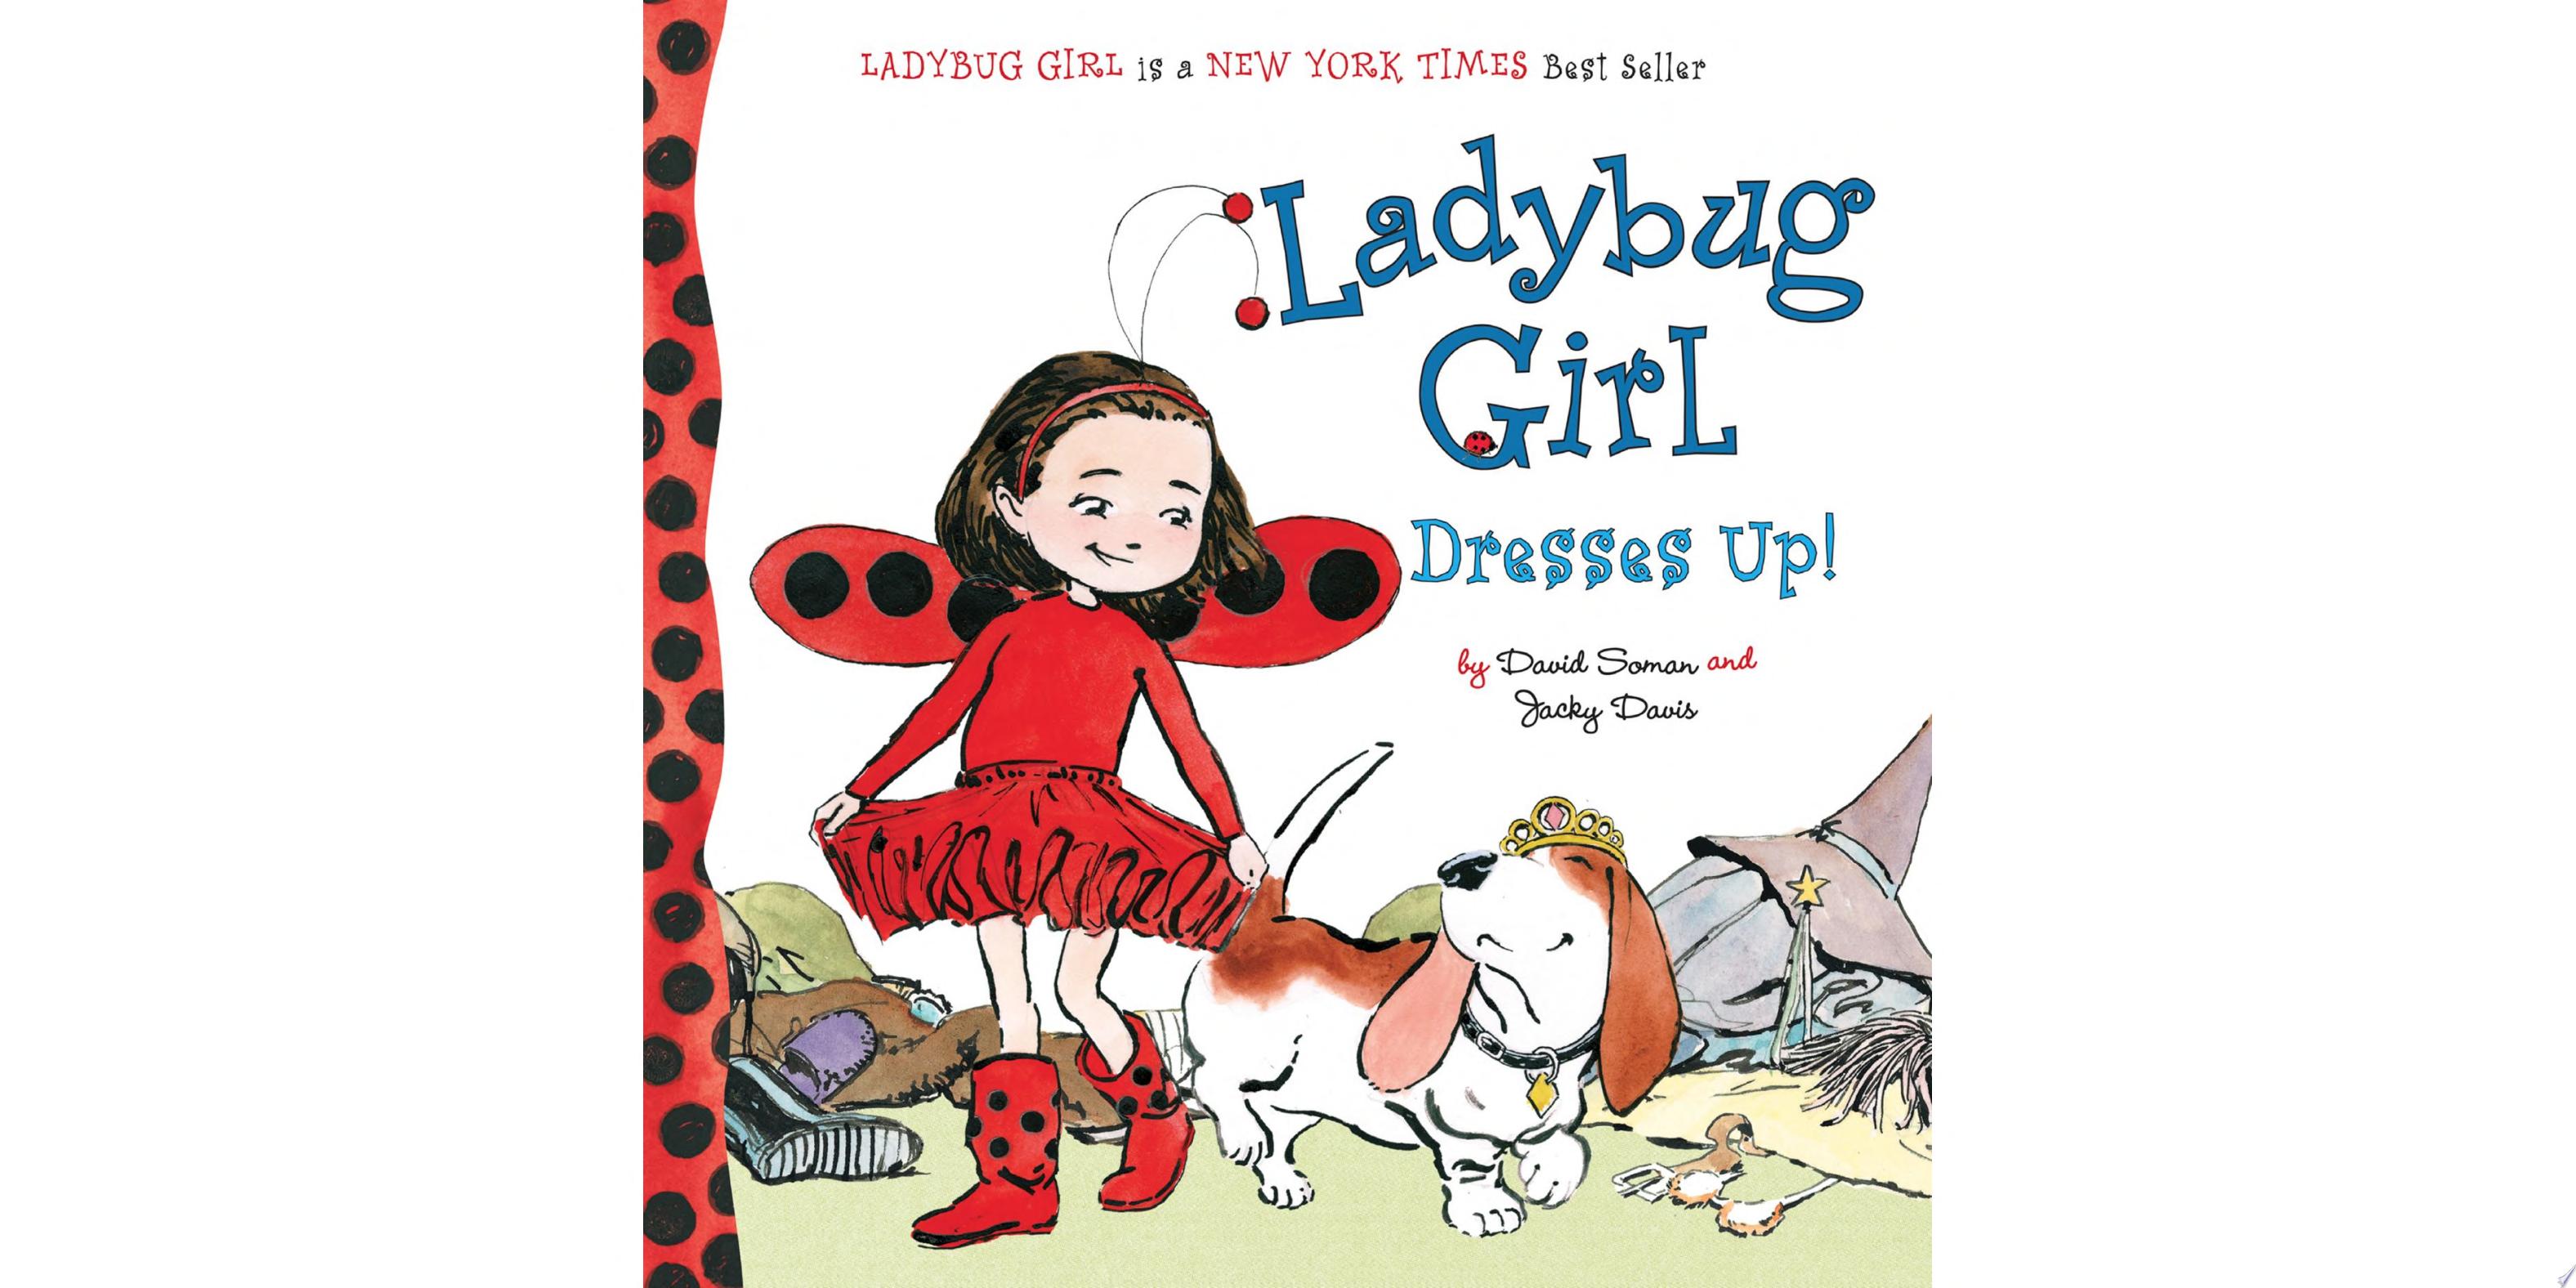 Image for "Ladybug Girl Dresses Up!"